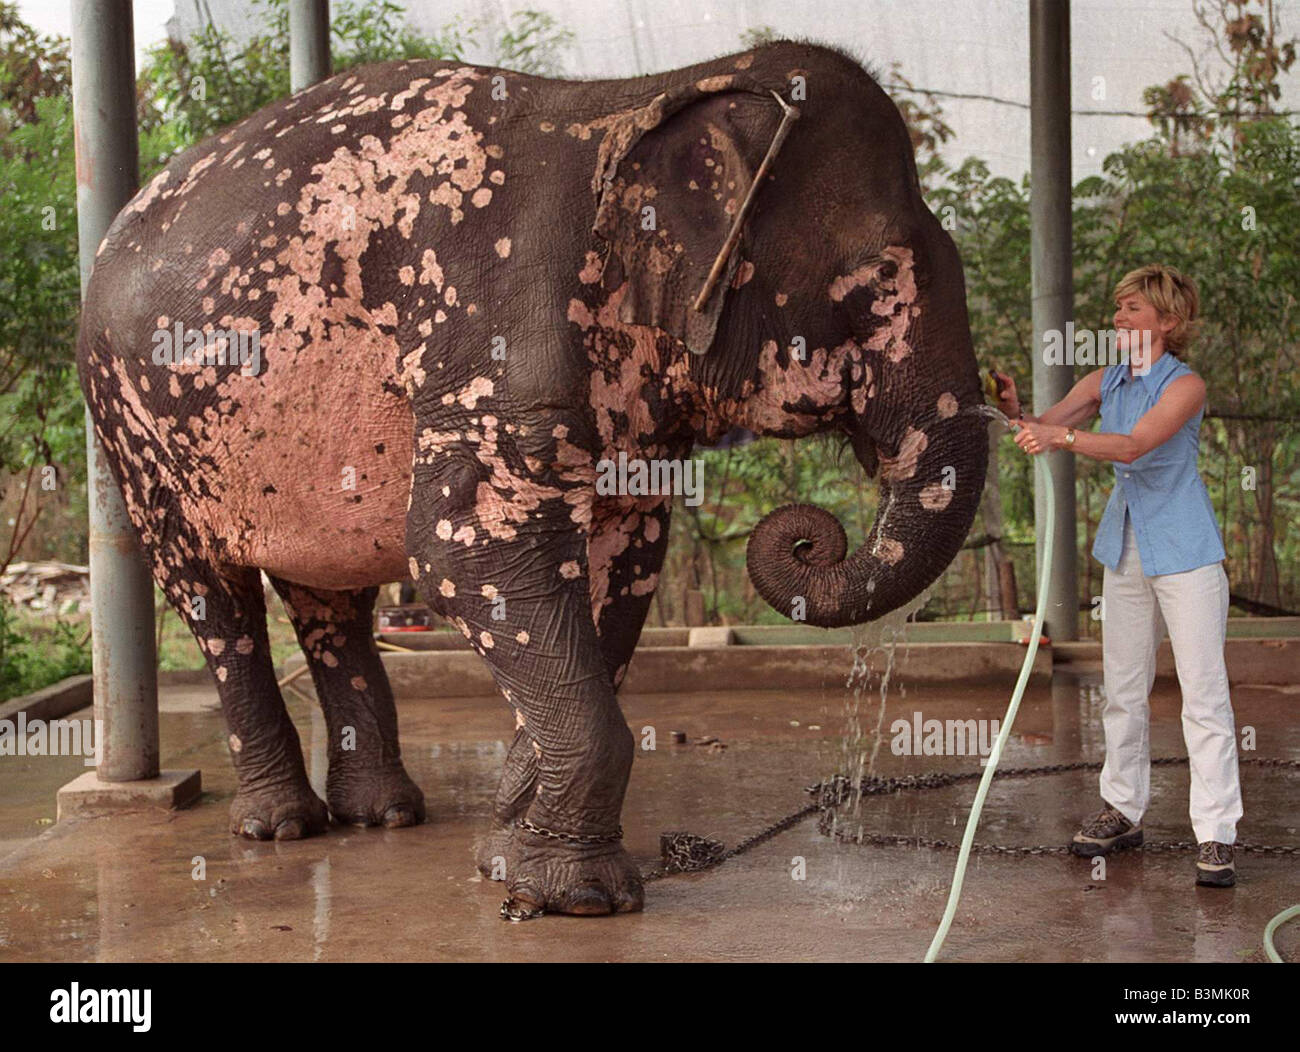 Anthea Turner Februar 2000 TV Moderator Baden ein Elefant mirrorpix Stockfoto